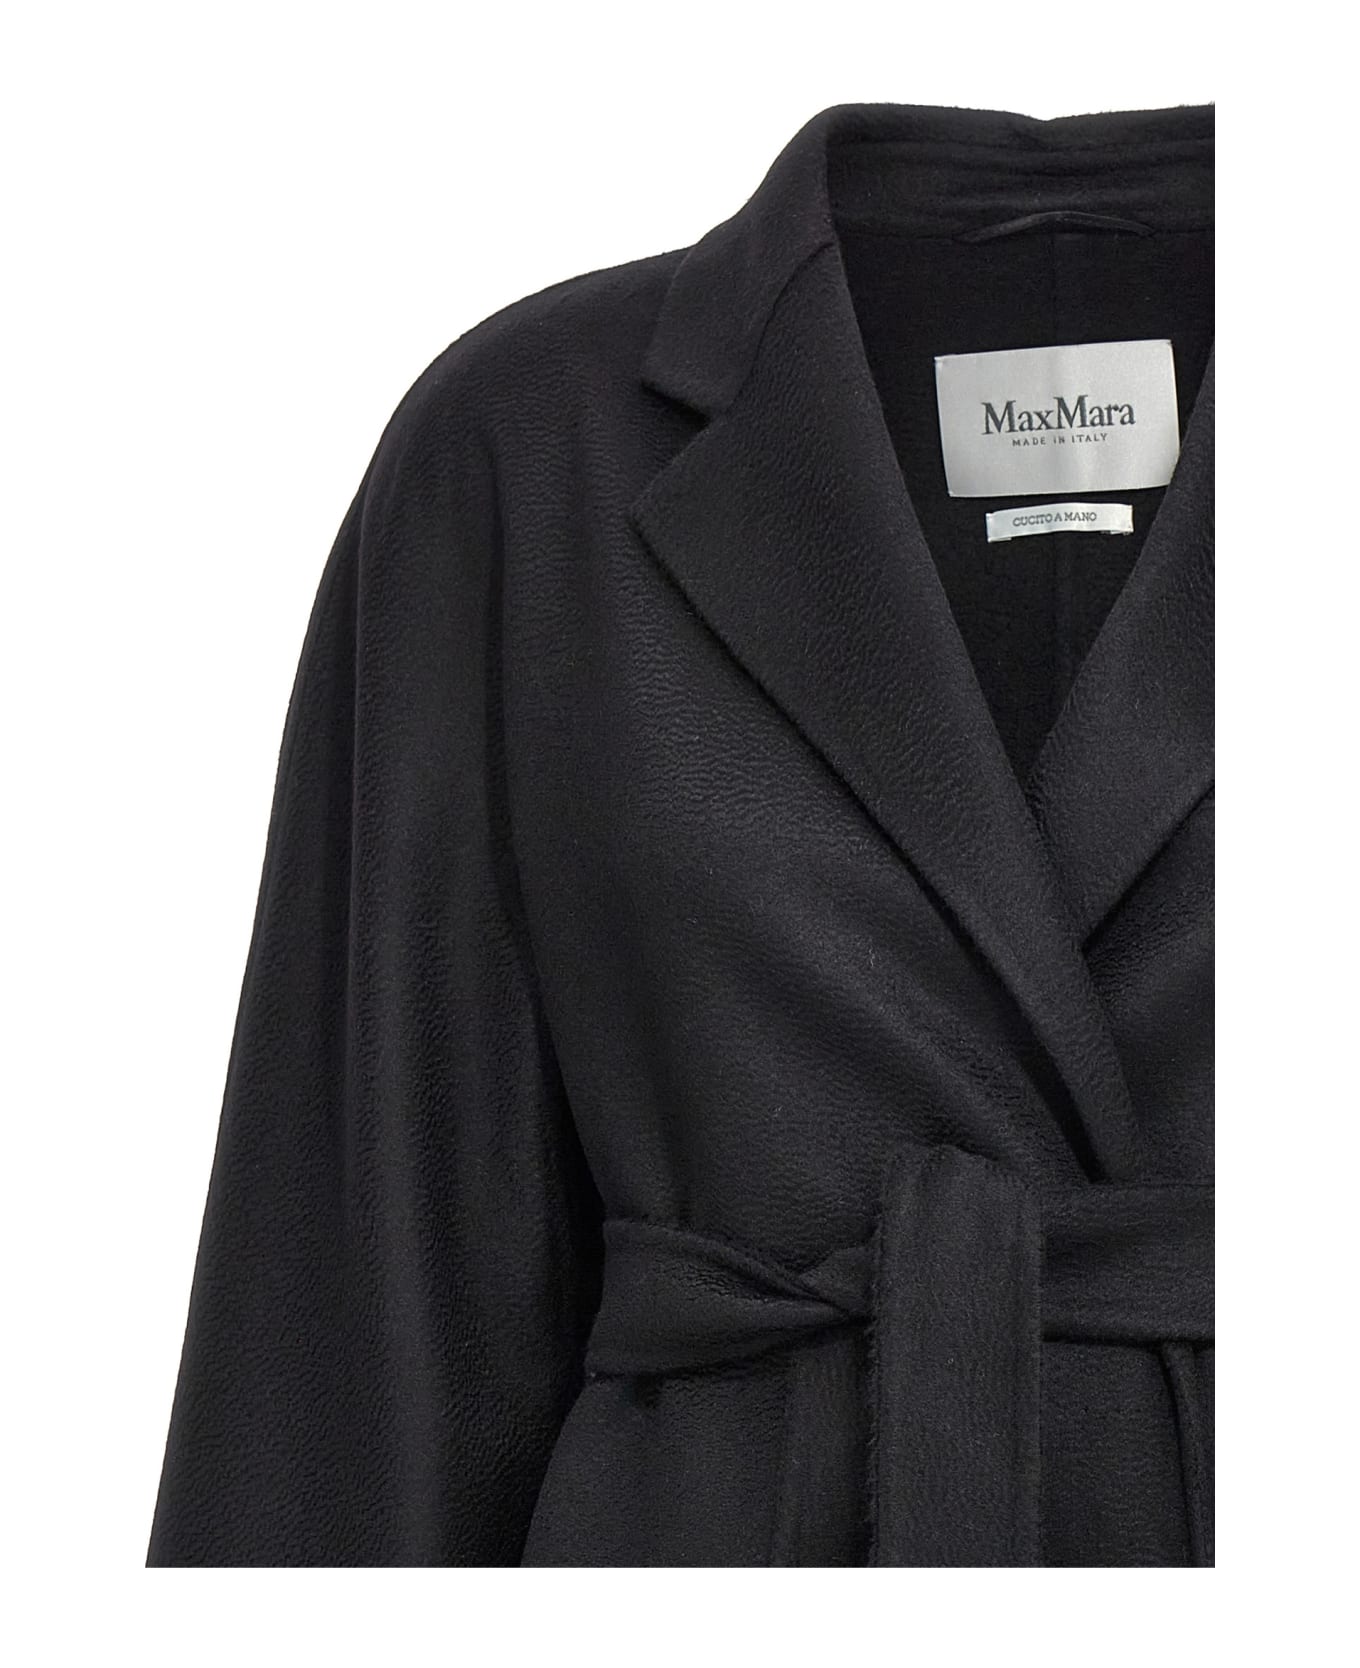 Max Mara 'harold' Jacket - Black  